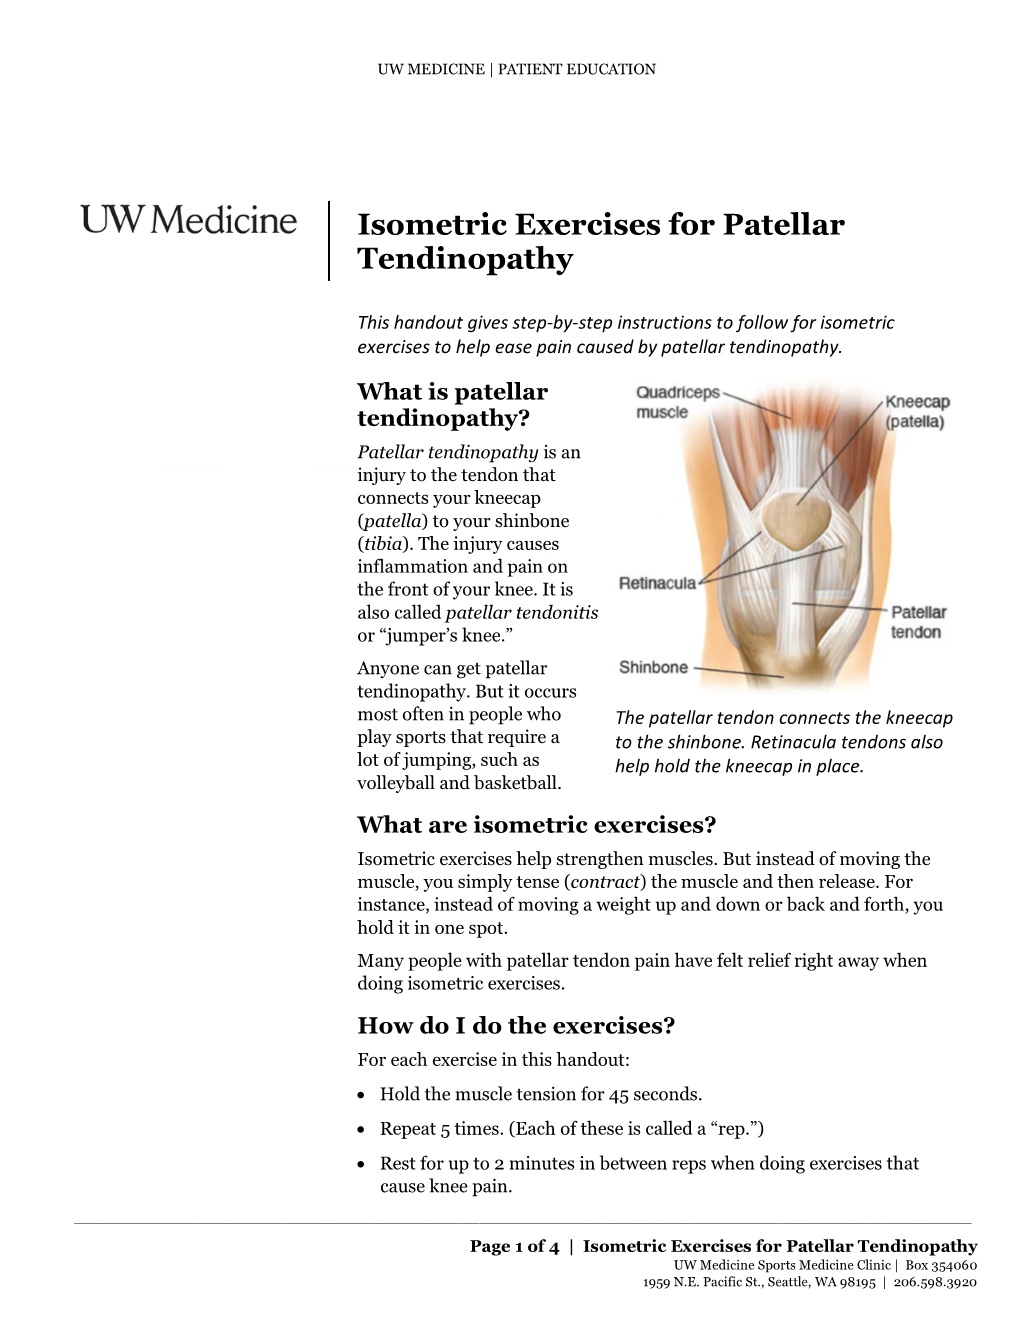 Isometric Exercises for Patellar Tendinopathy UW Medicine Sports Medicine Clinic | Box 354060 1959 N.E